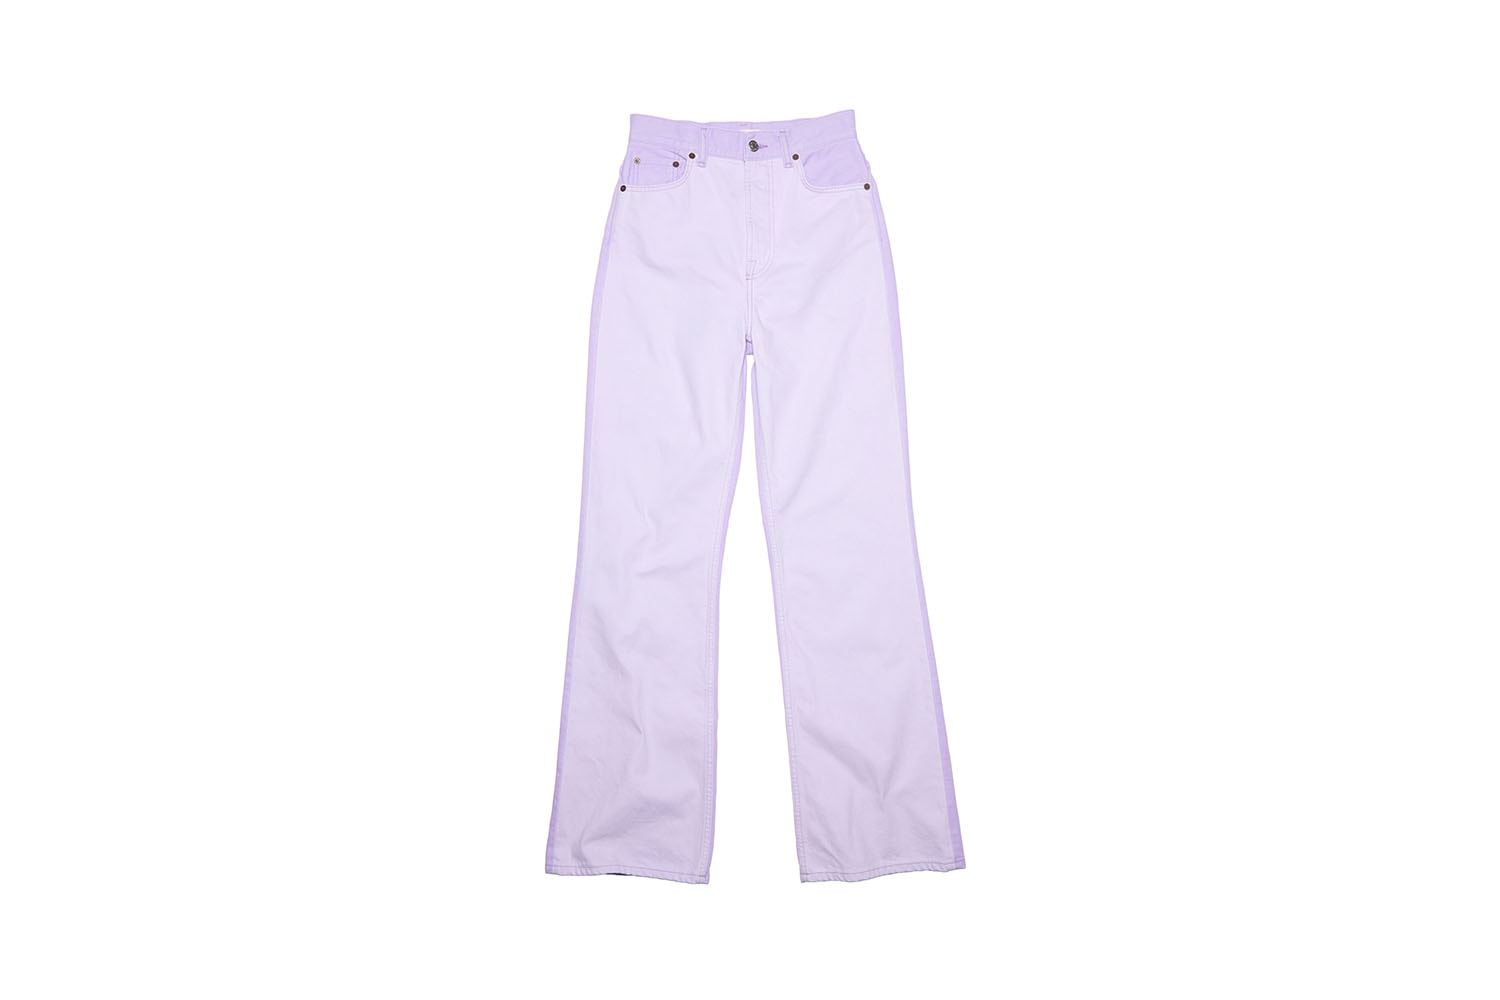 Acne Studios Season 4 Repurposed Fabrics Pieces Dresses Jackets Jeans Pants Shirts T-Shirts Purple Denim Patterns Florals